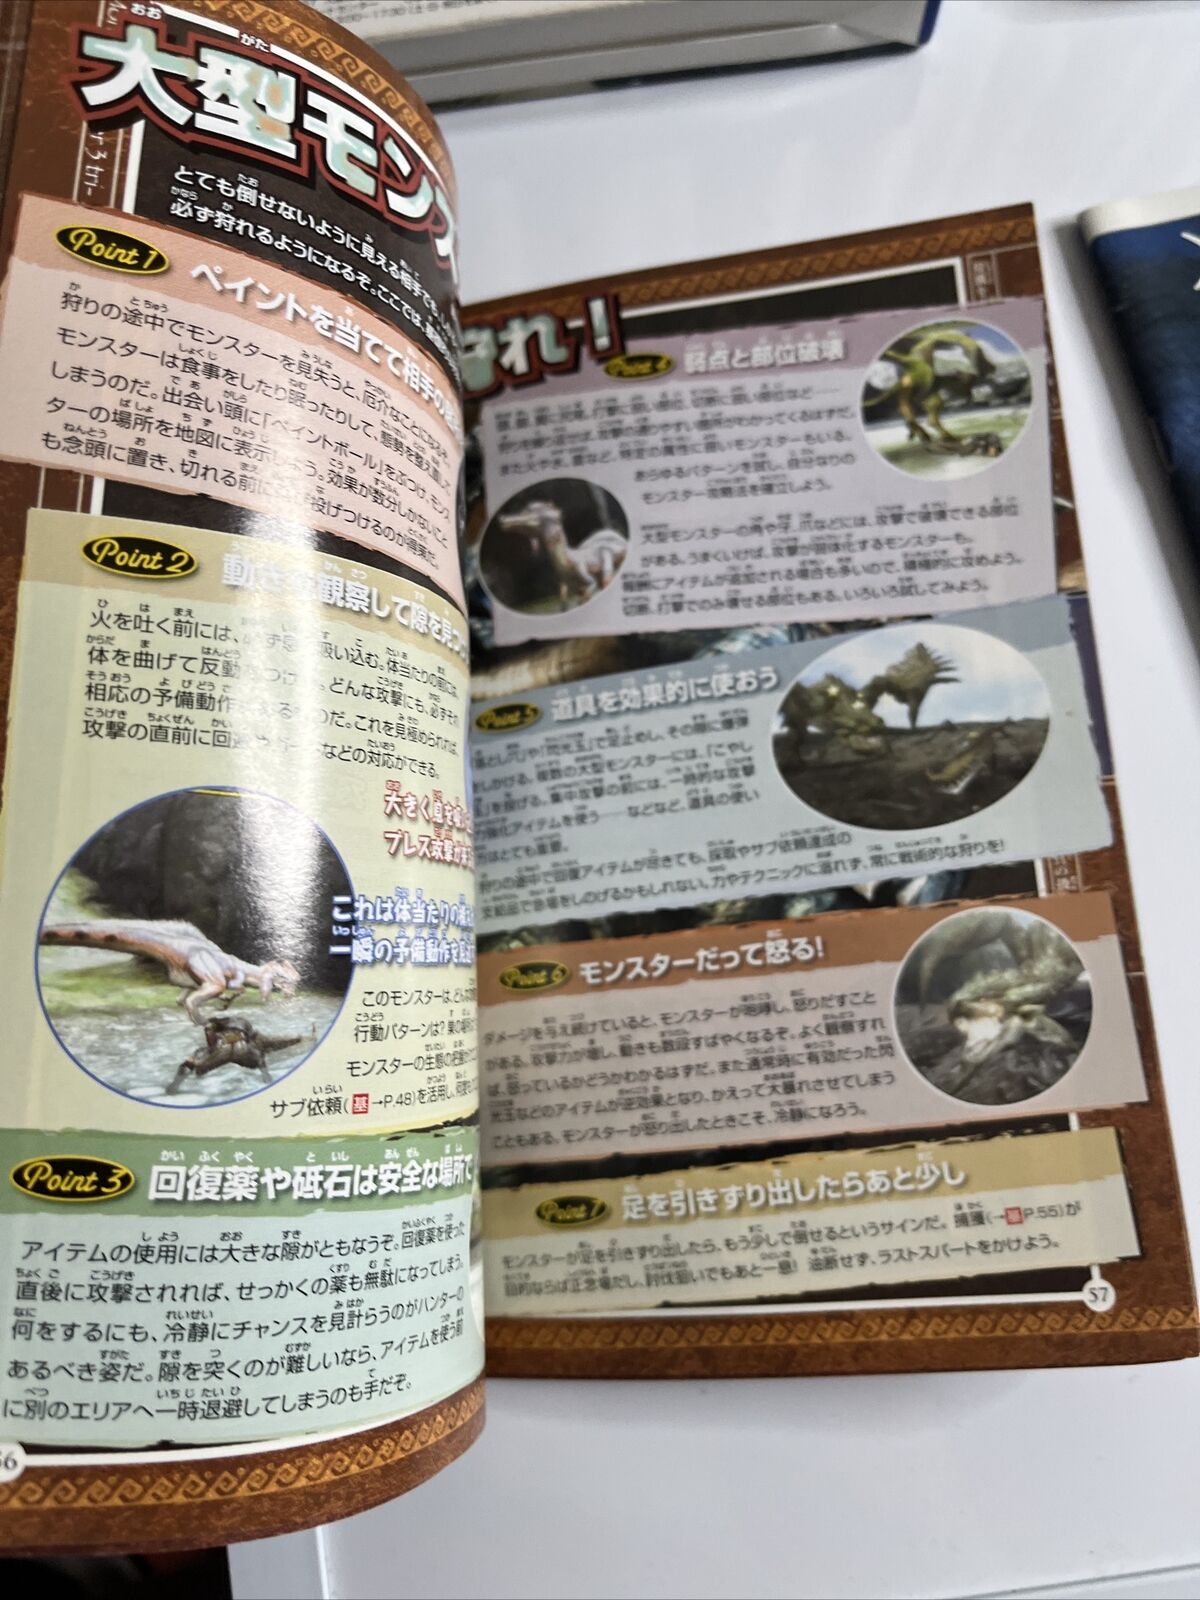 Monster Hunter 3 Tri  Nintendo Wii NTSC-J JAPAN Game Complete